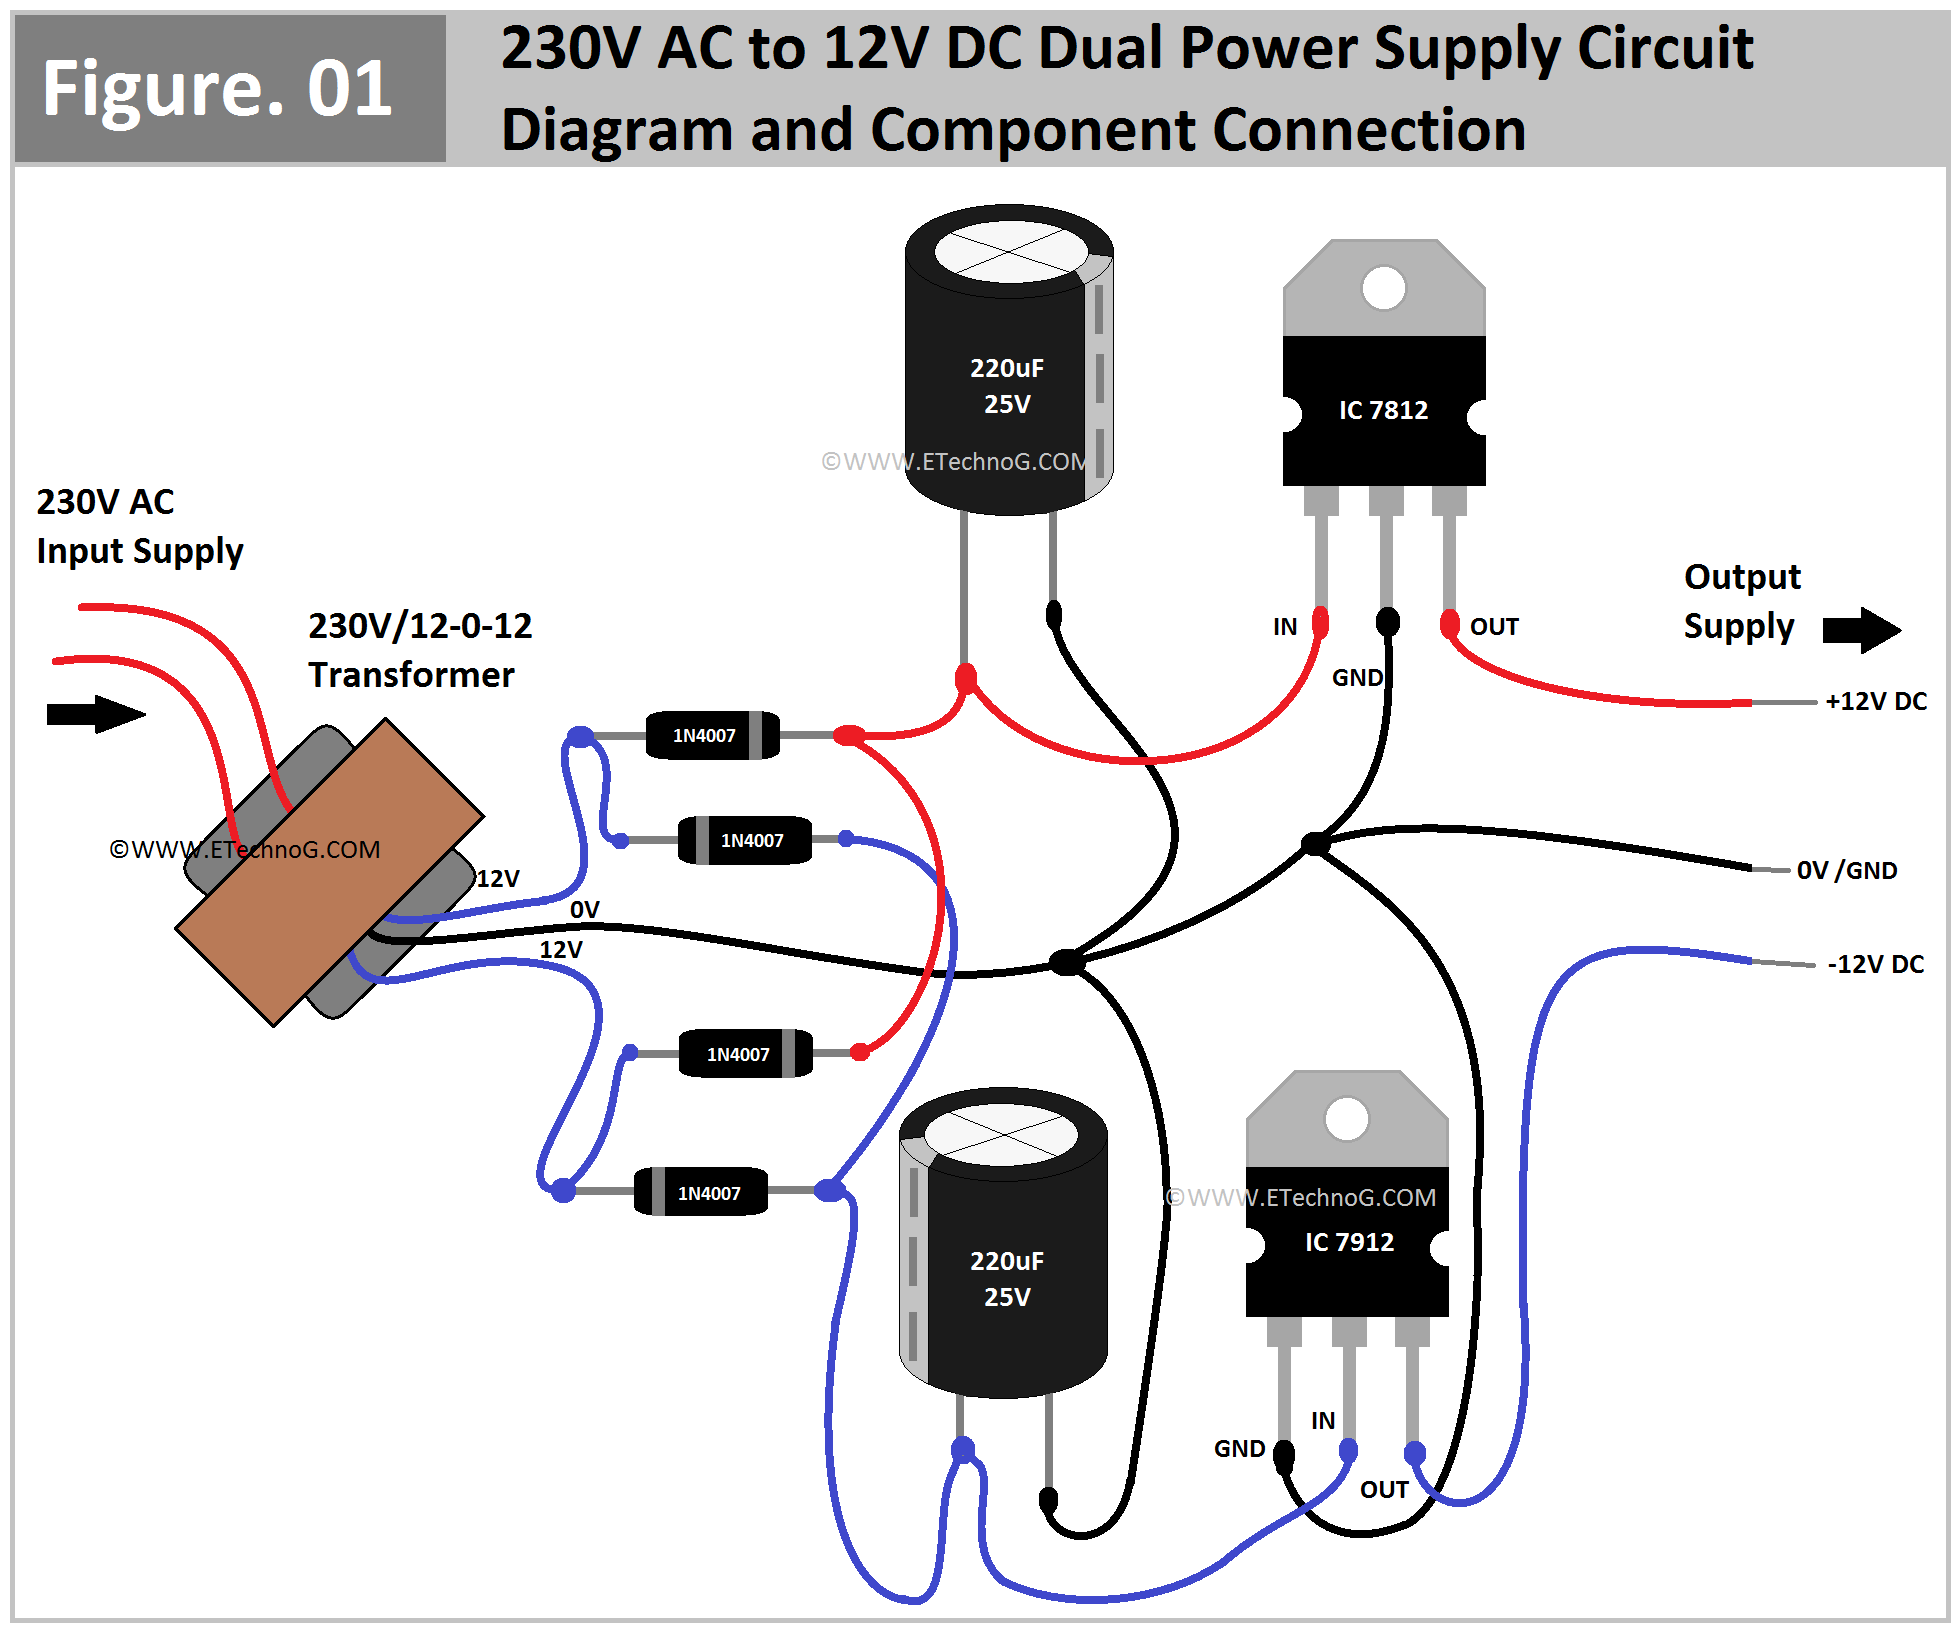 230V AC to 12V DC Dual Power Supply Circuit Diagram